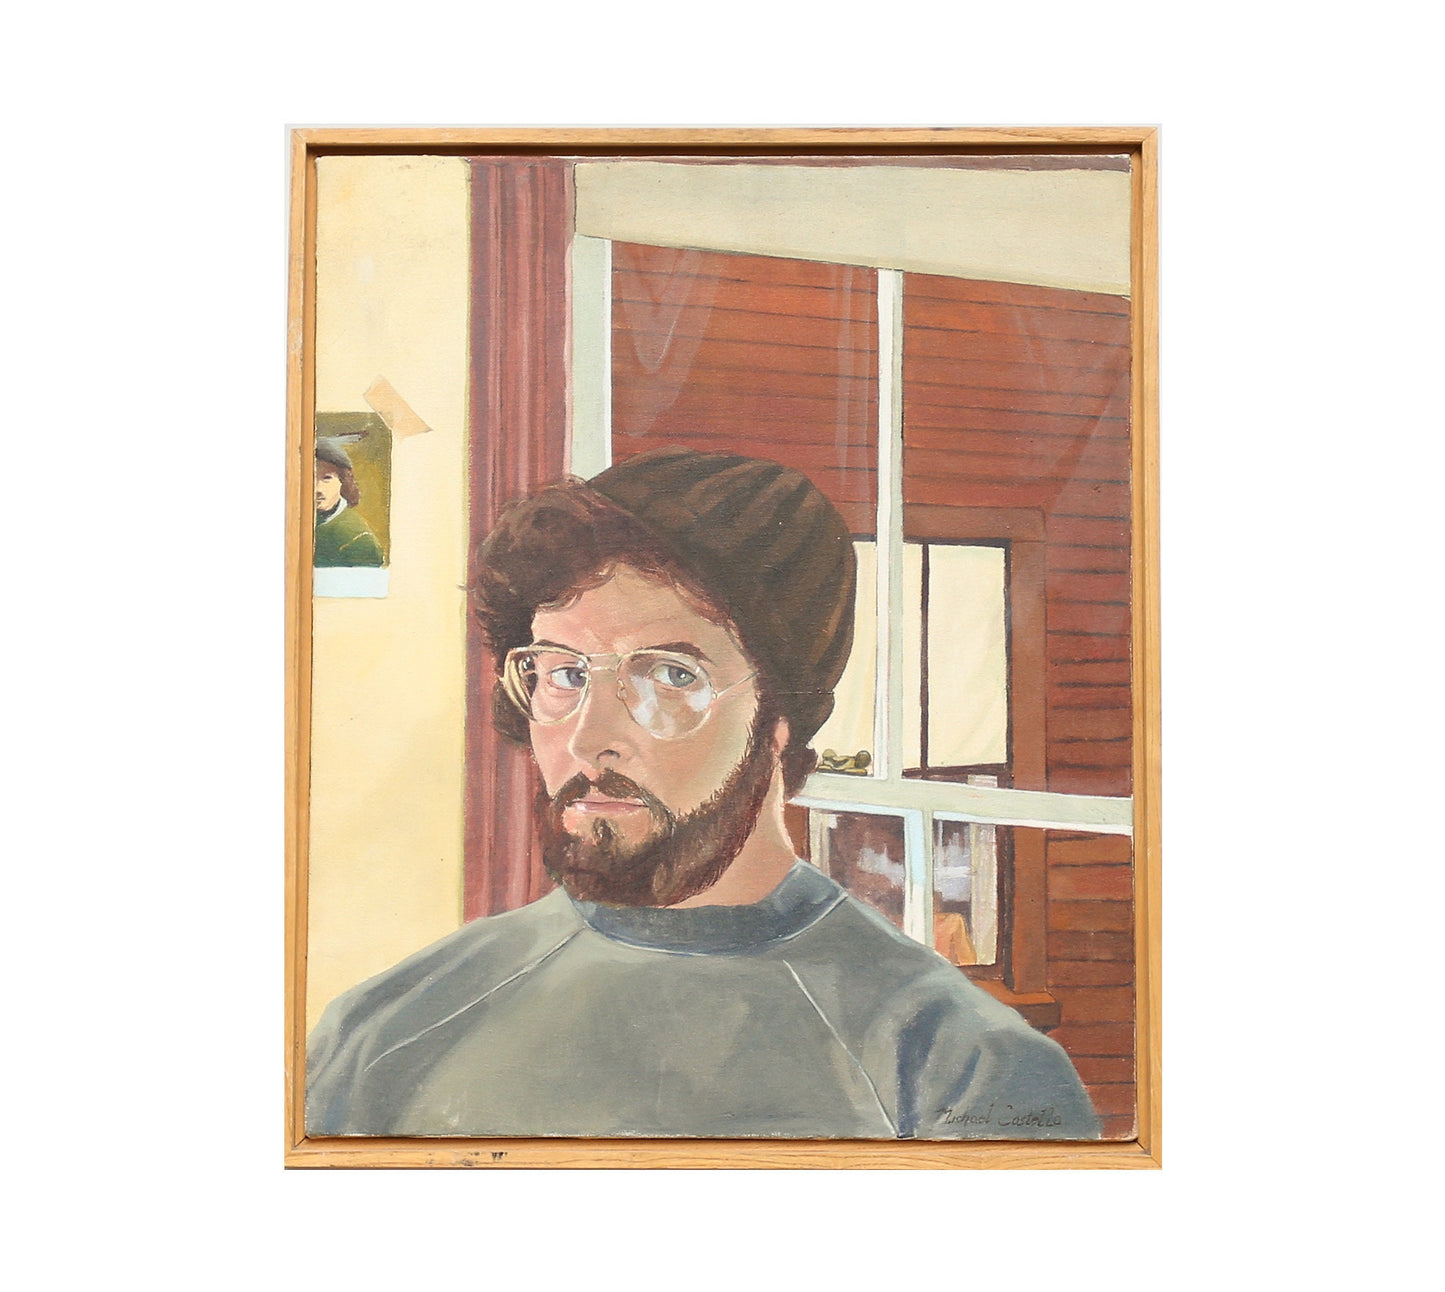 Michael Costello Painting Provincetown Self Portrait Oil on Canvas 1979 Cape Cod Artist